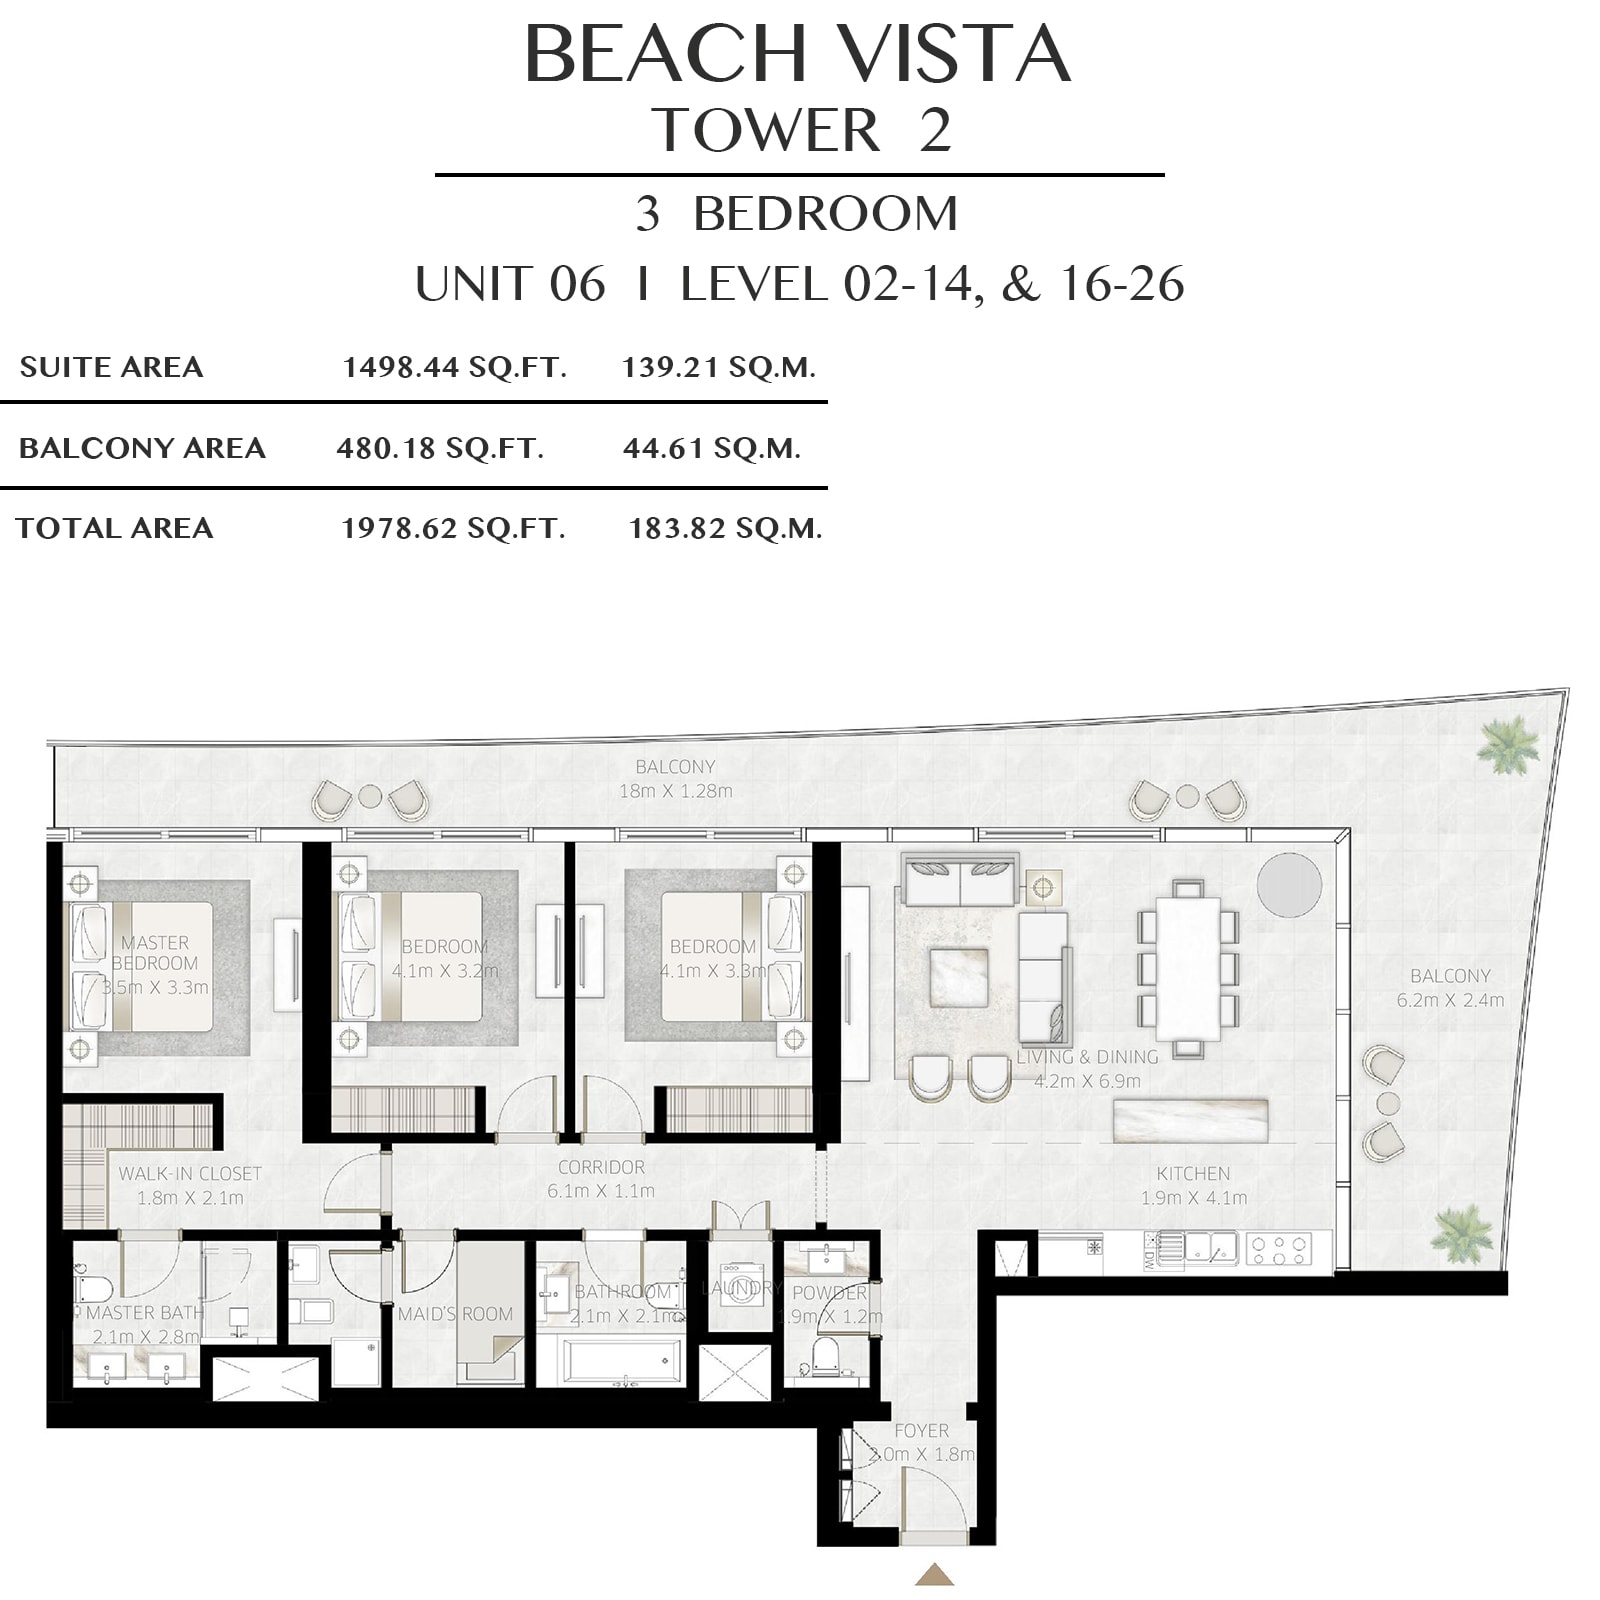 emaar beach vista apartments price dubai